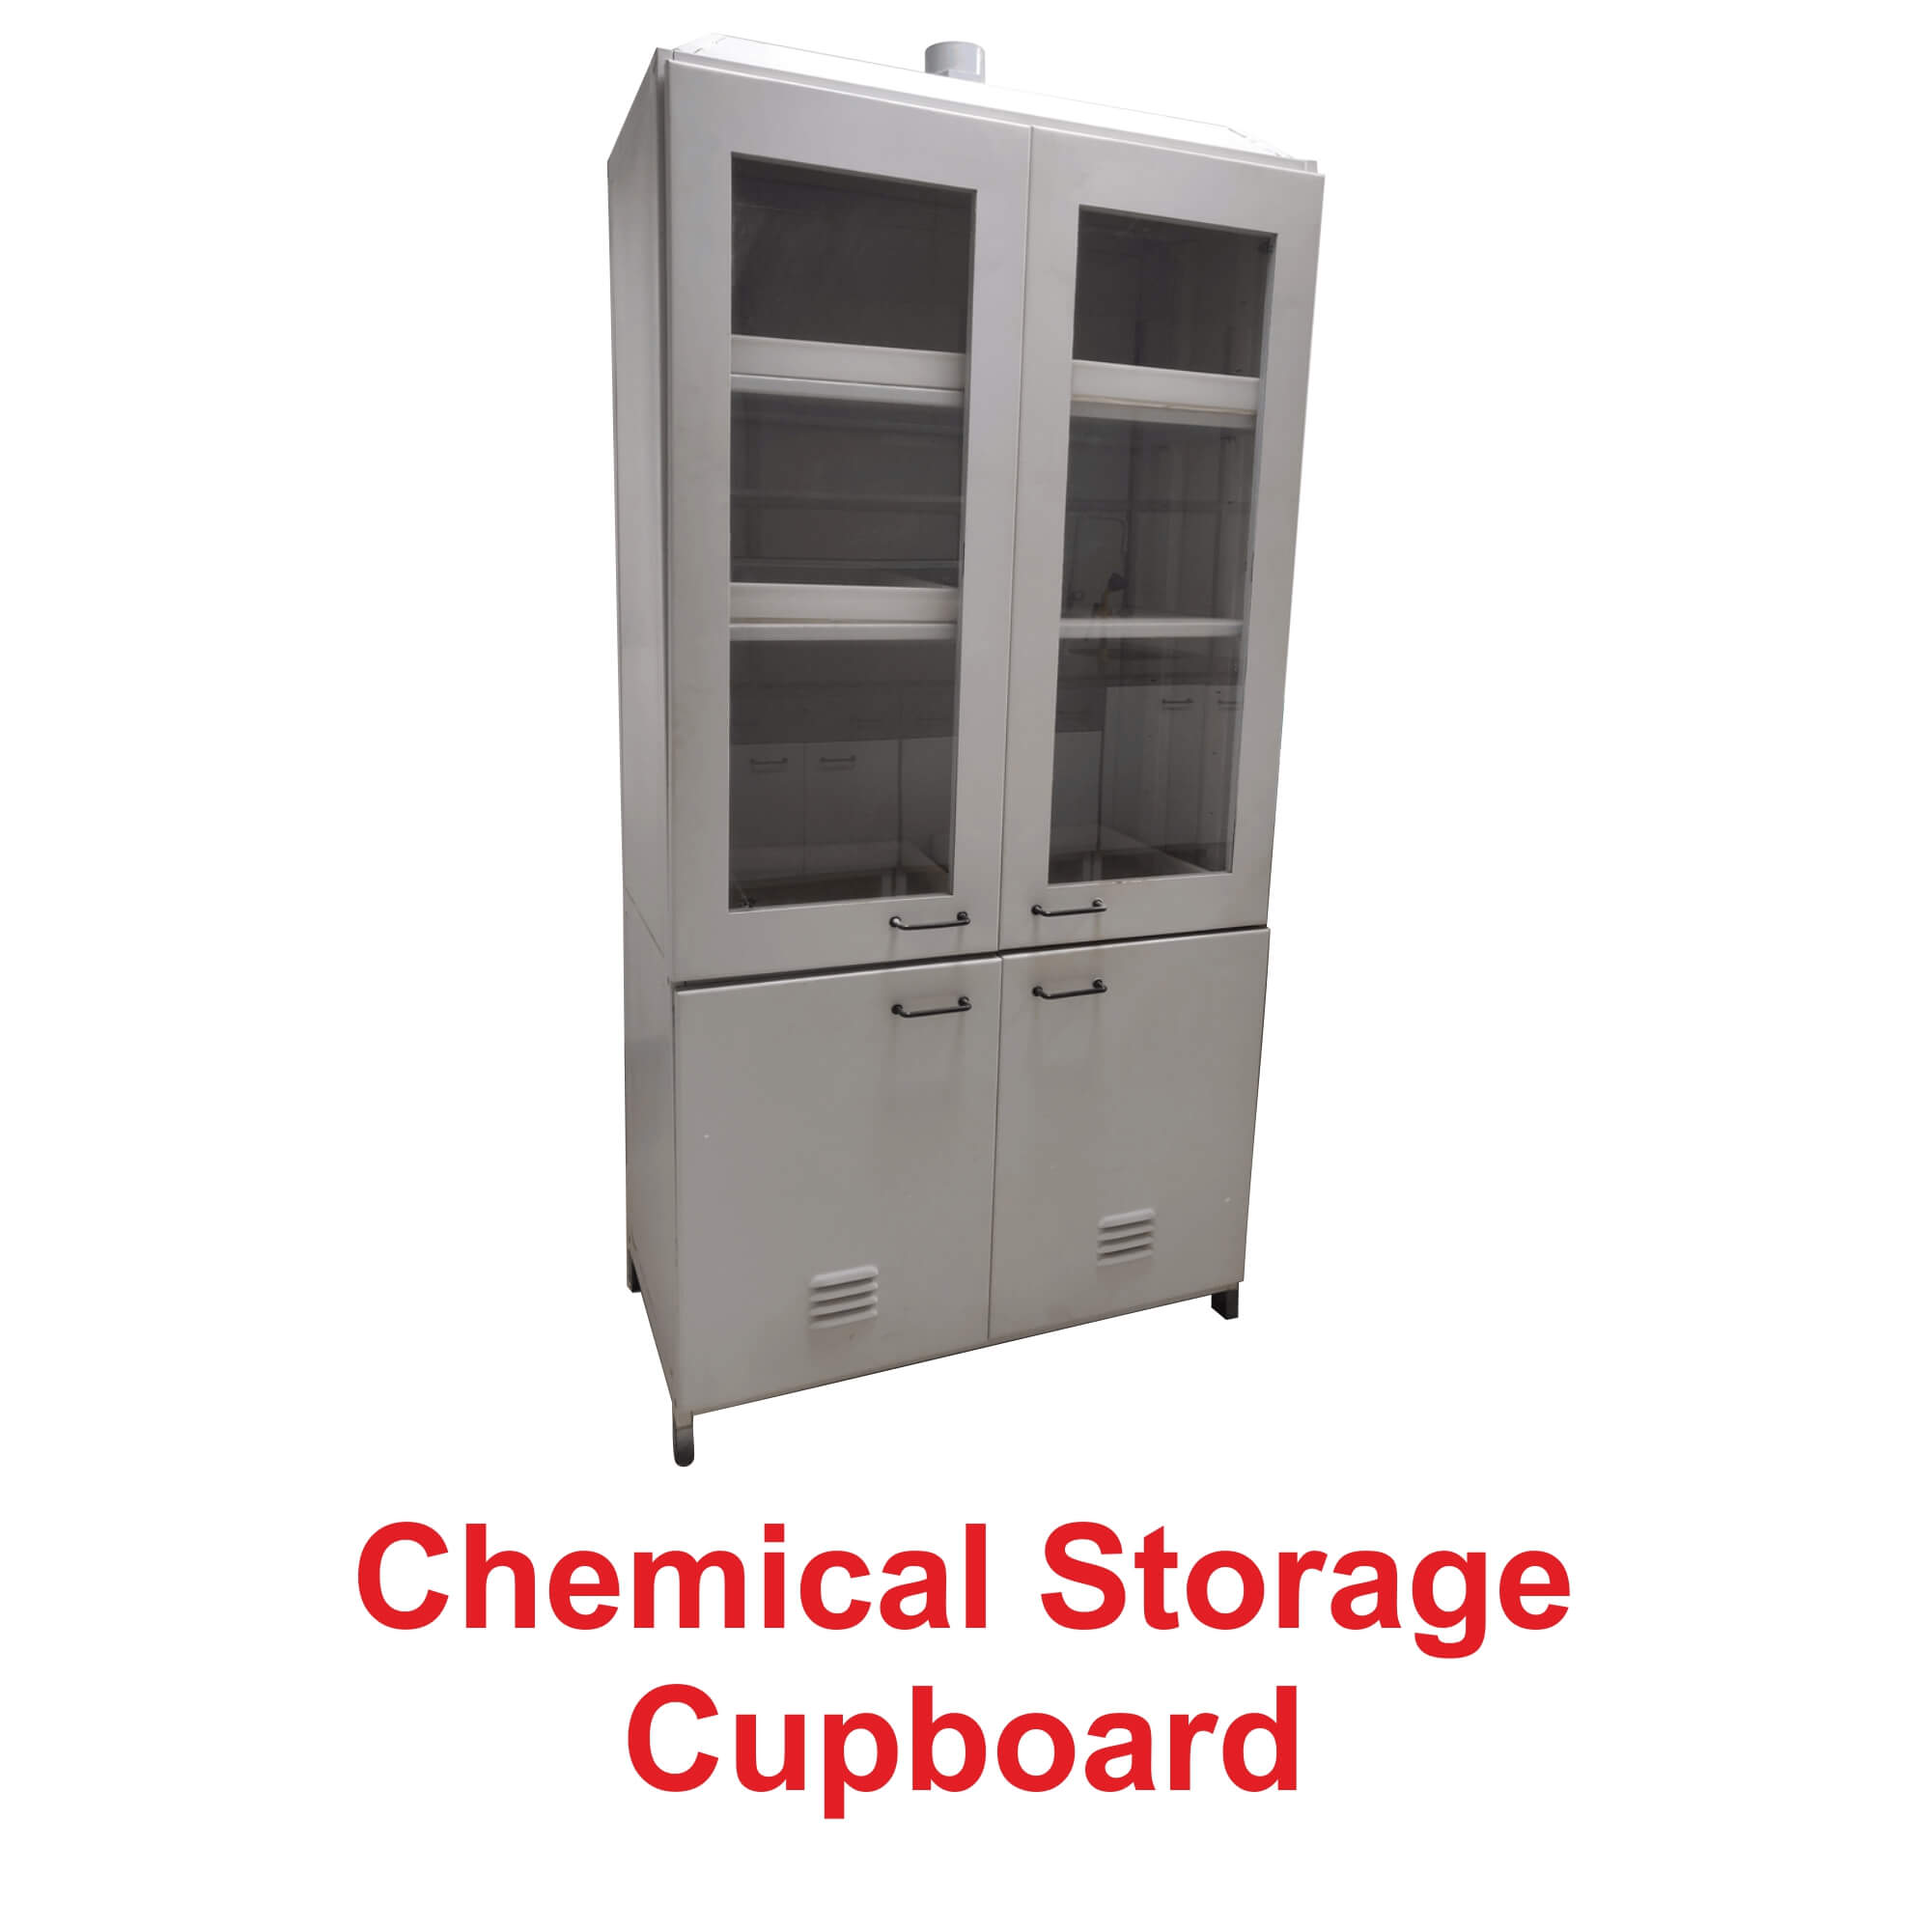 Chemical Storage Cupboard Manufacturer in India